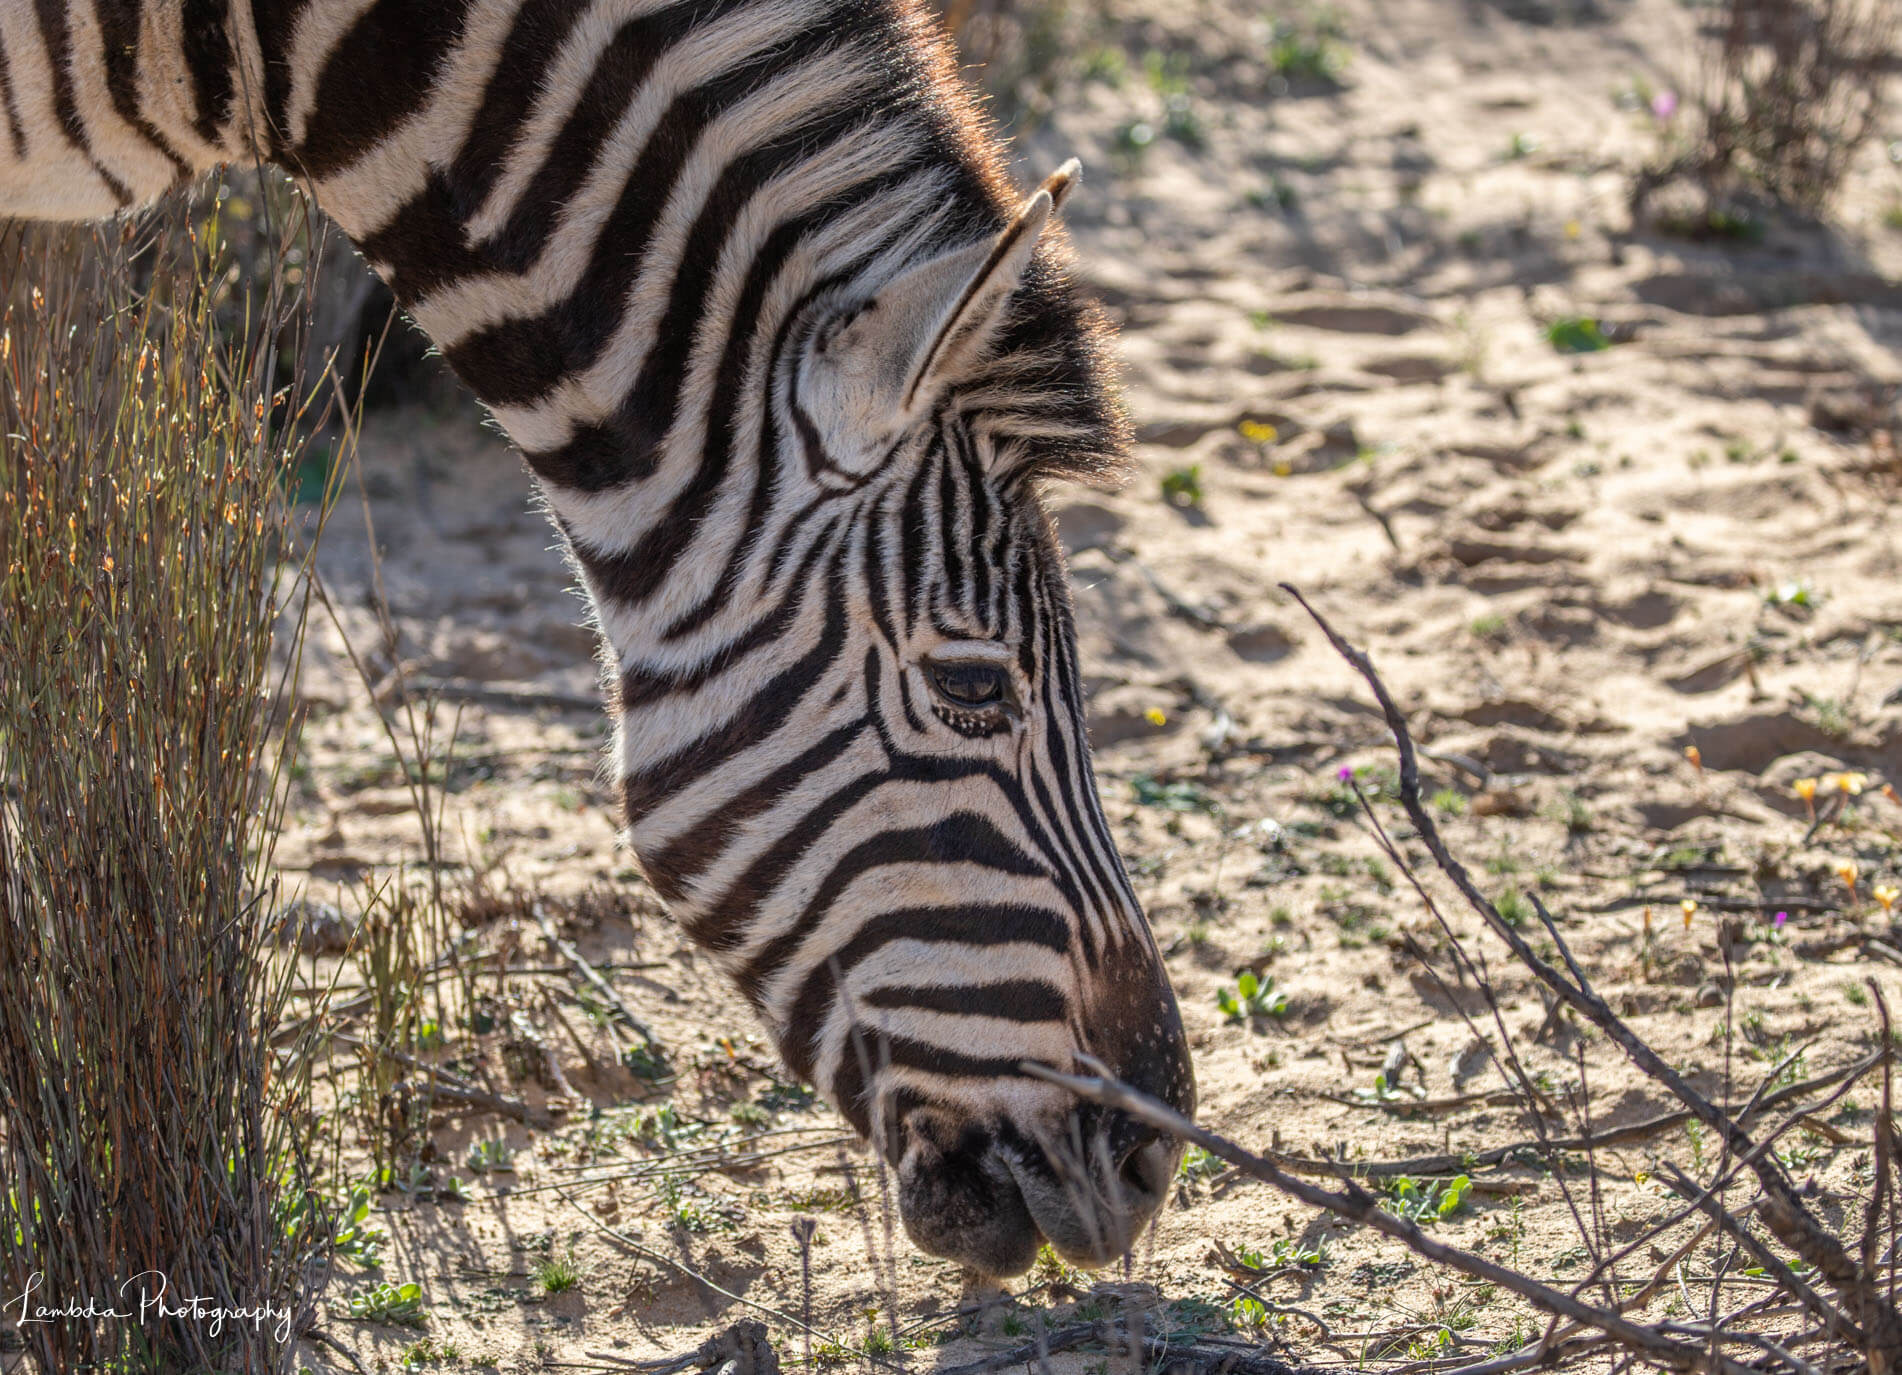 South African Zebra